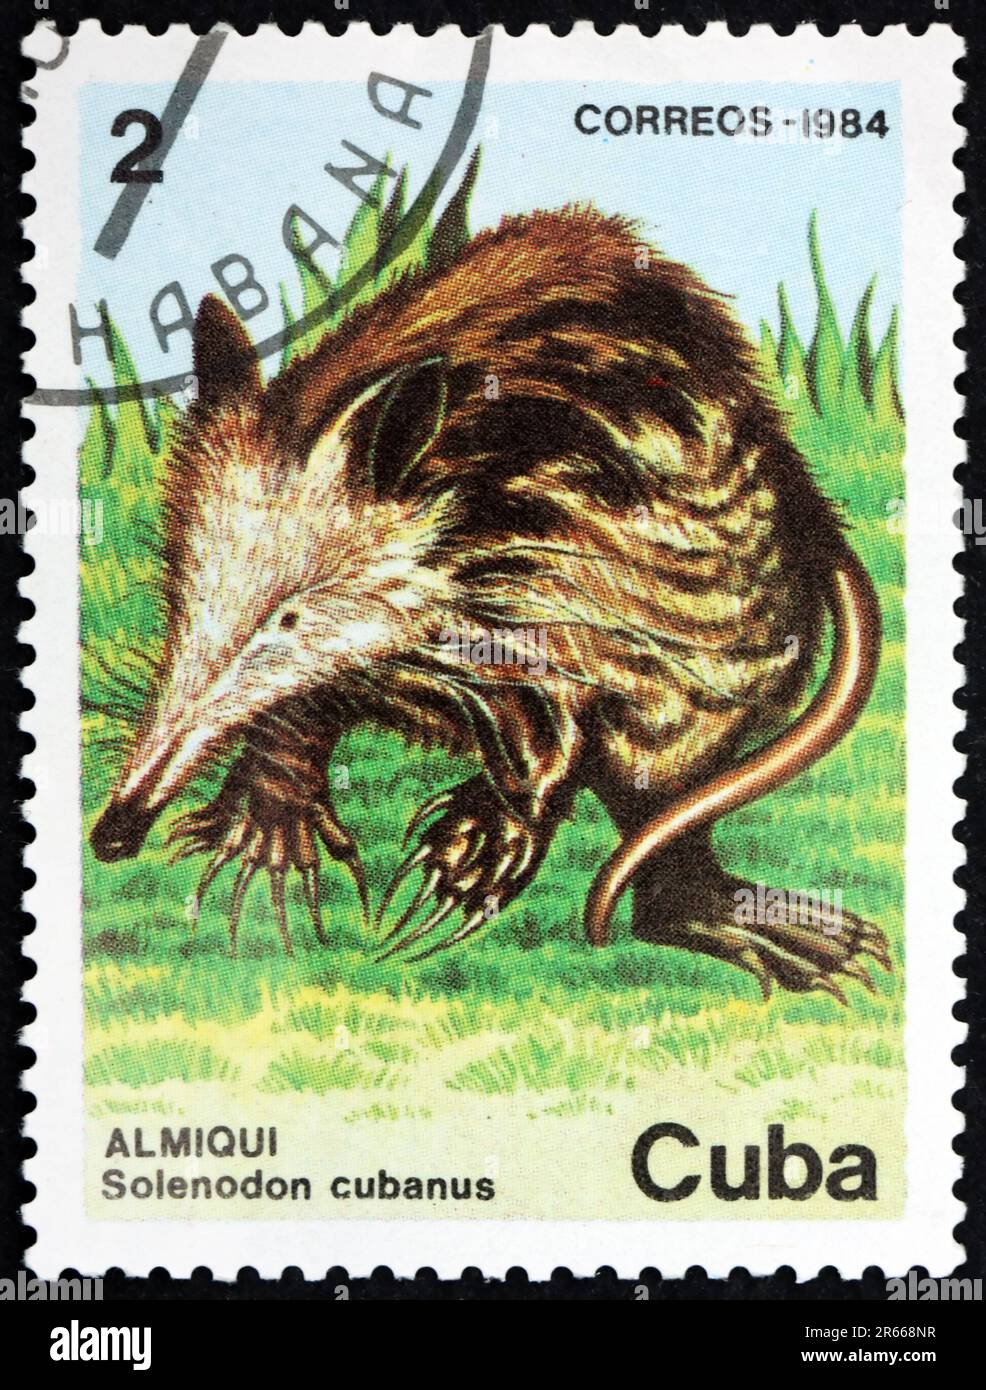 CUBA - CIRCA 1984: a stamp printed in Cuba shows Cuban solenodon, atopogale cubana, is a small, furry mammal endemic to Cuba, circa 1984 Stock Photo